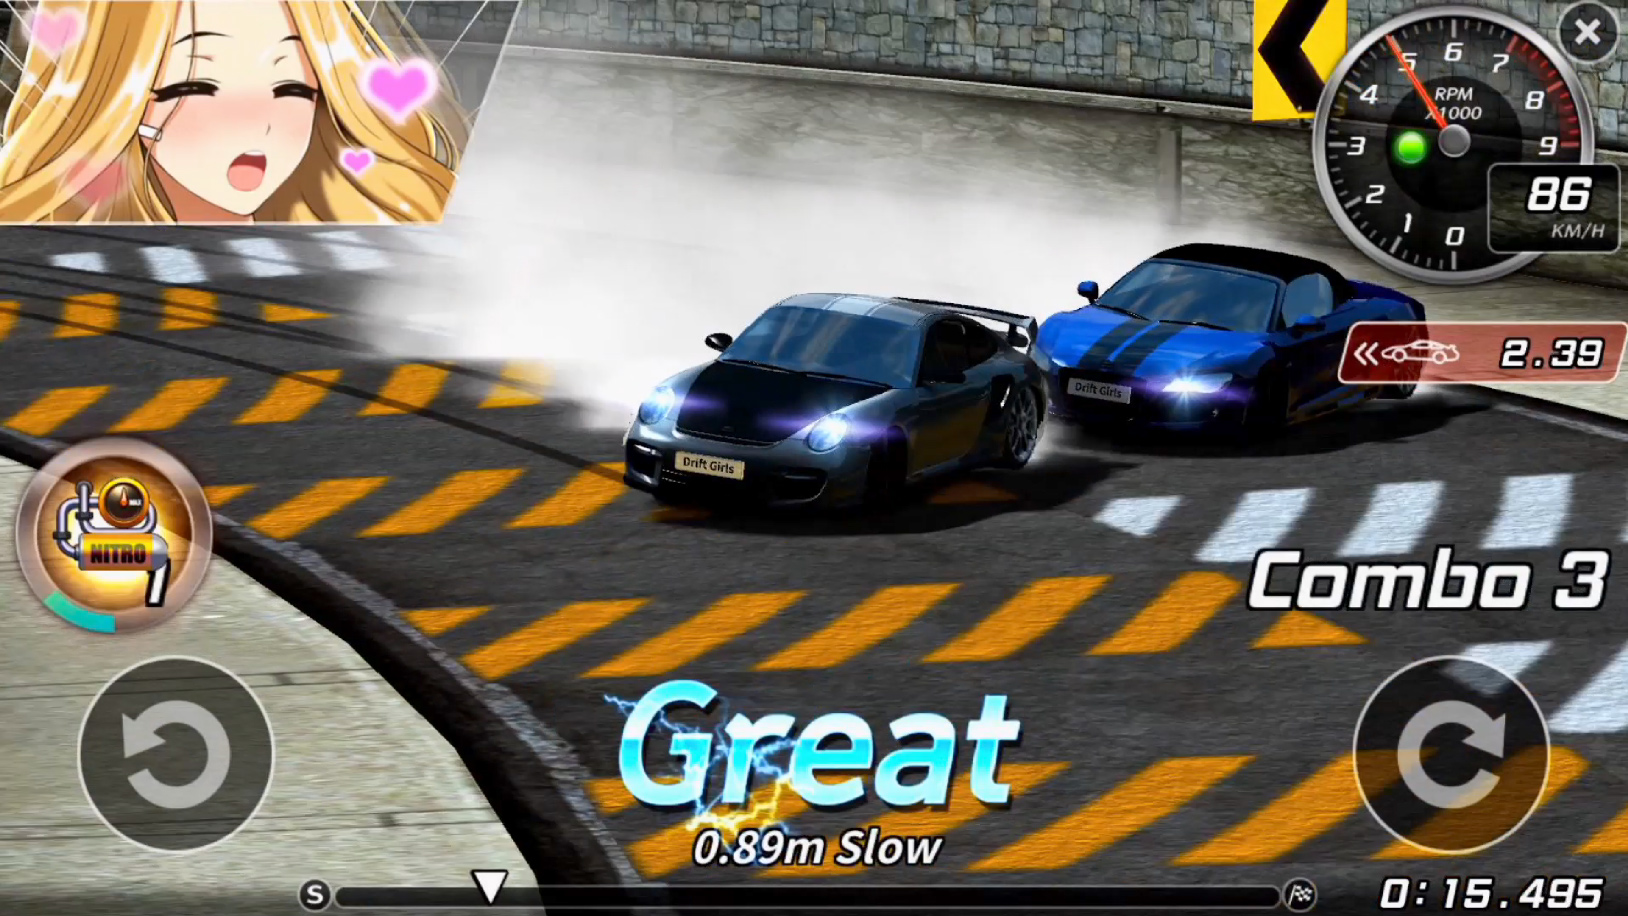 Auto race godswar online